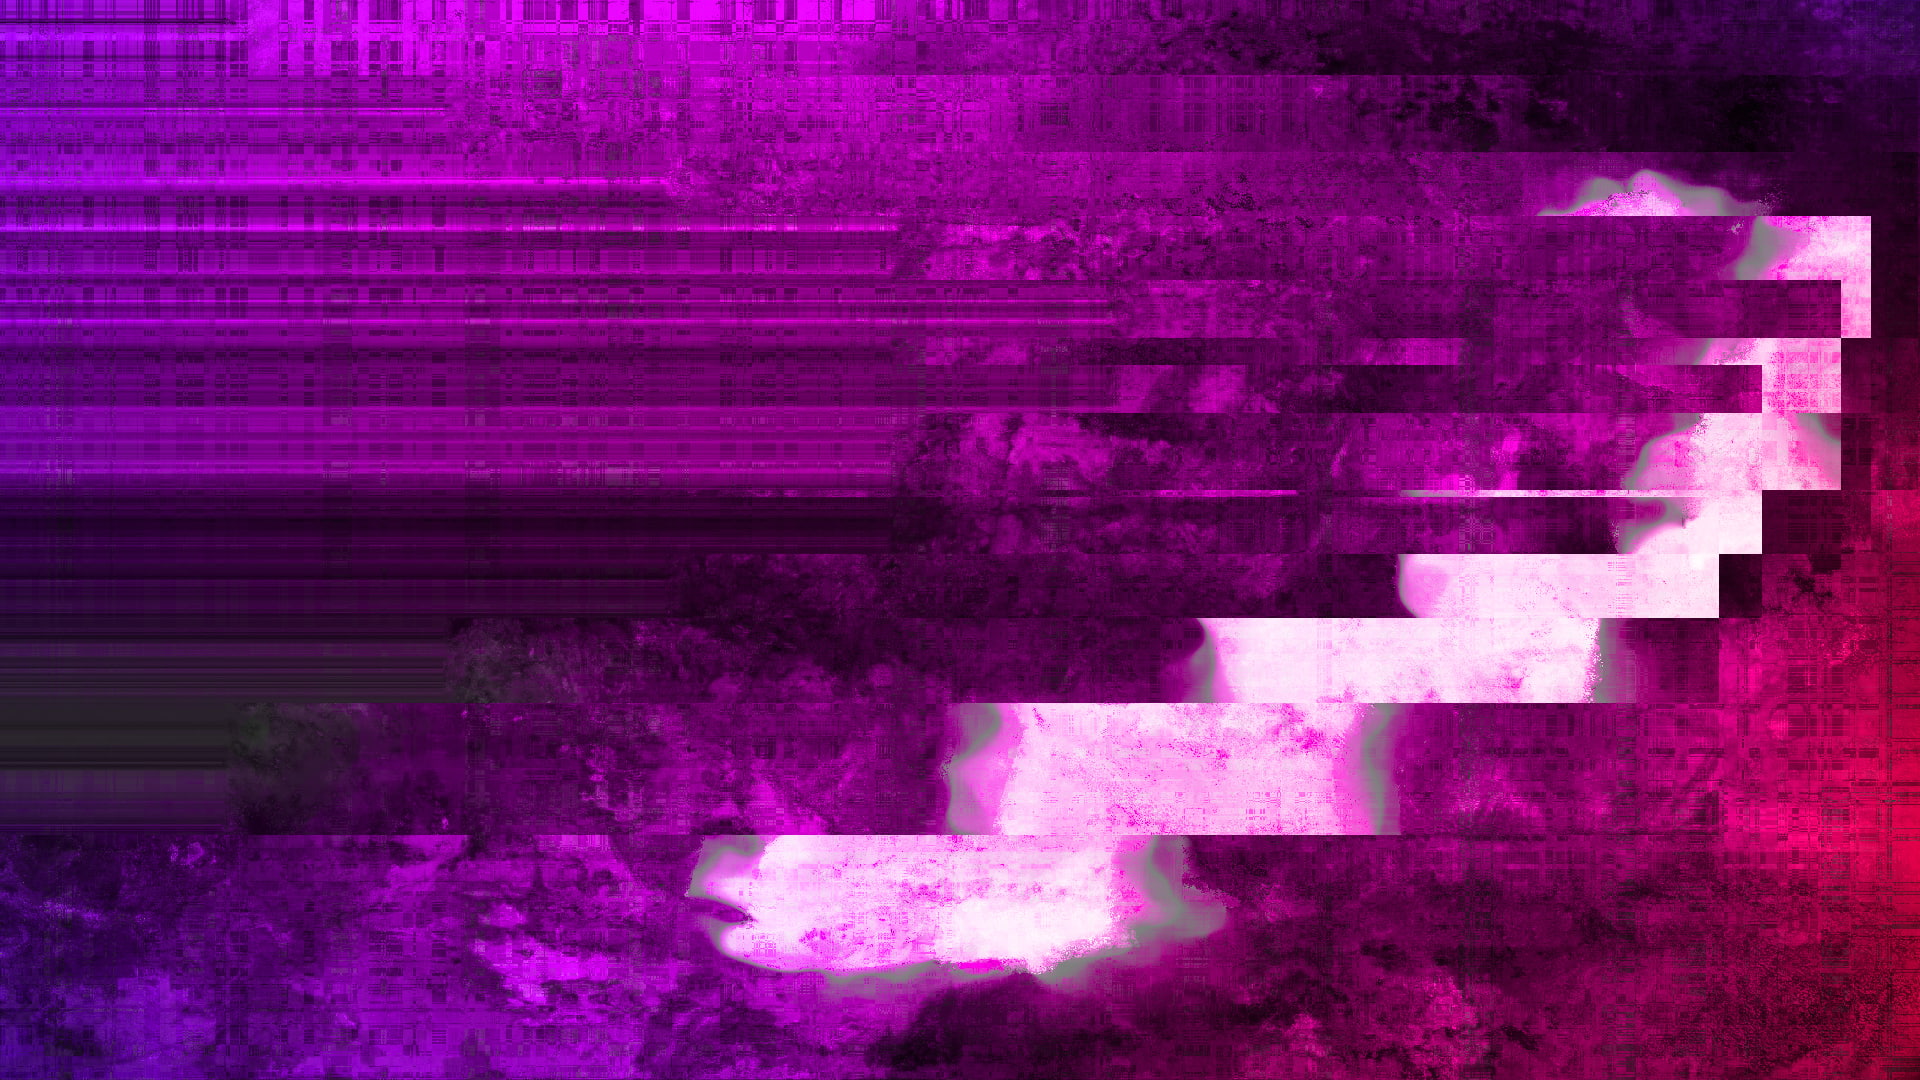 3,316 16:9 Aspect Ratio s (SFW), purple, pink color, no people